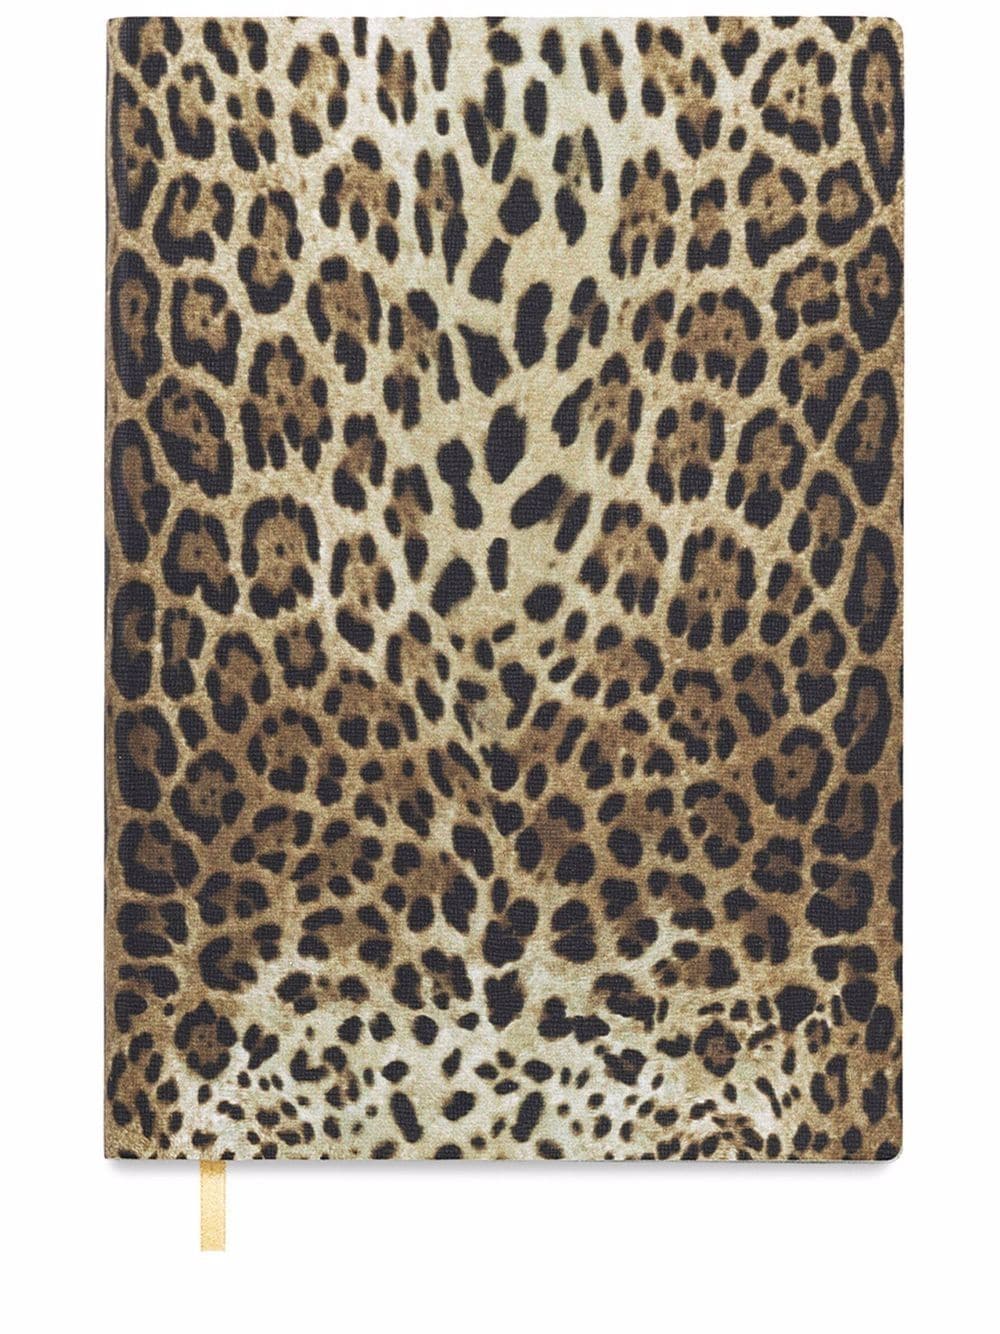 Dolce & Gabbana medium leopard-print leather blank notebook